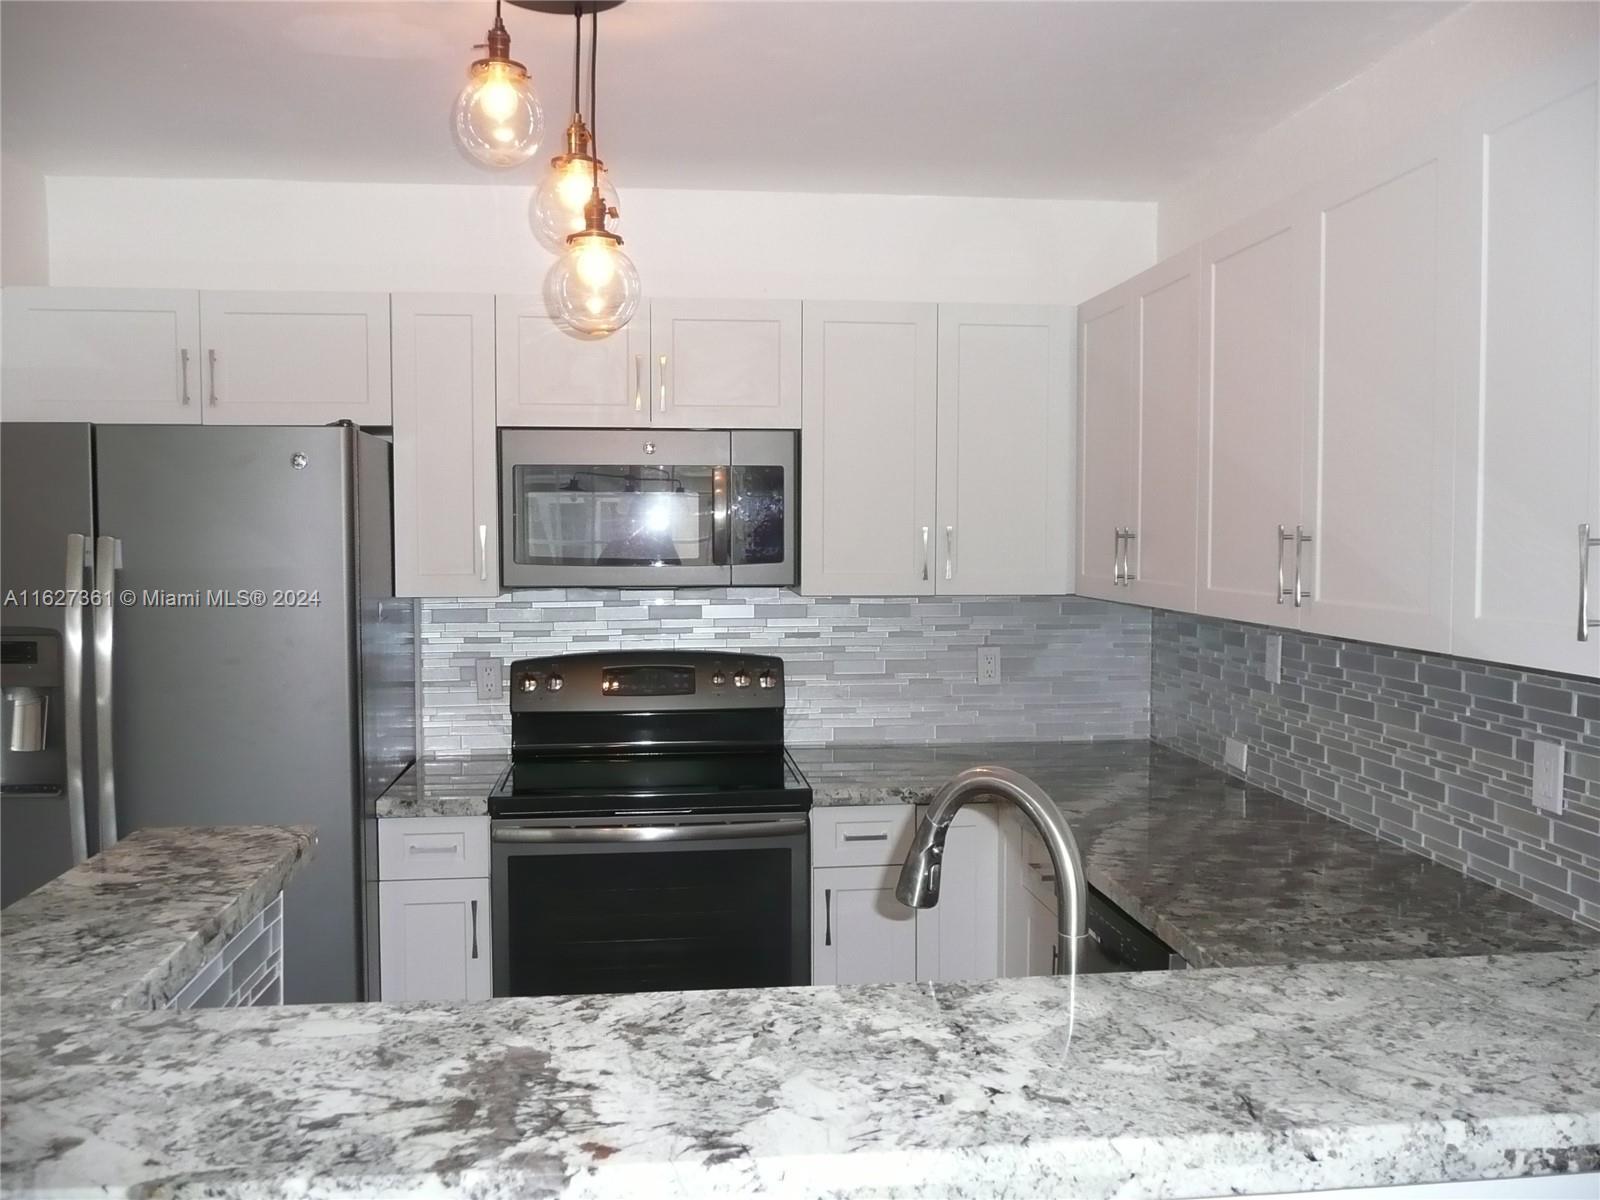 Rental Property at 2011 Renaissance Blvd 102, Miramar, Broward County, Florida - Bedrooms: 1 
Bathrooms: 1  - $1,900 MO.